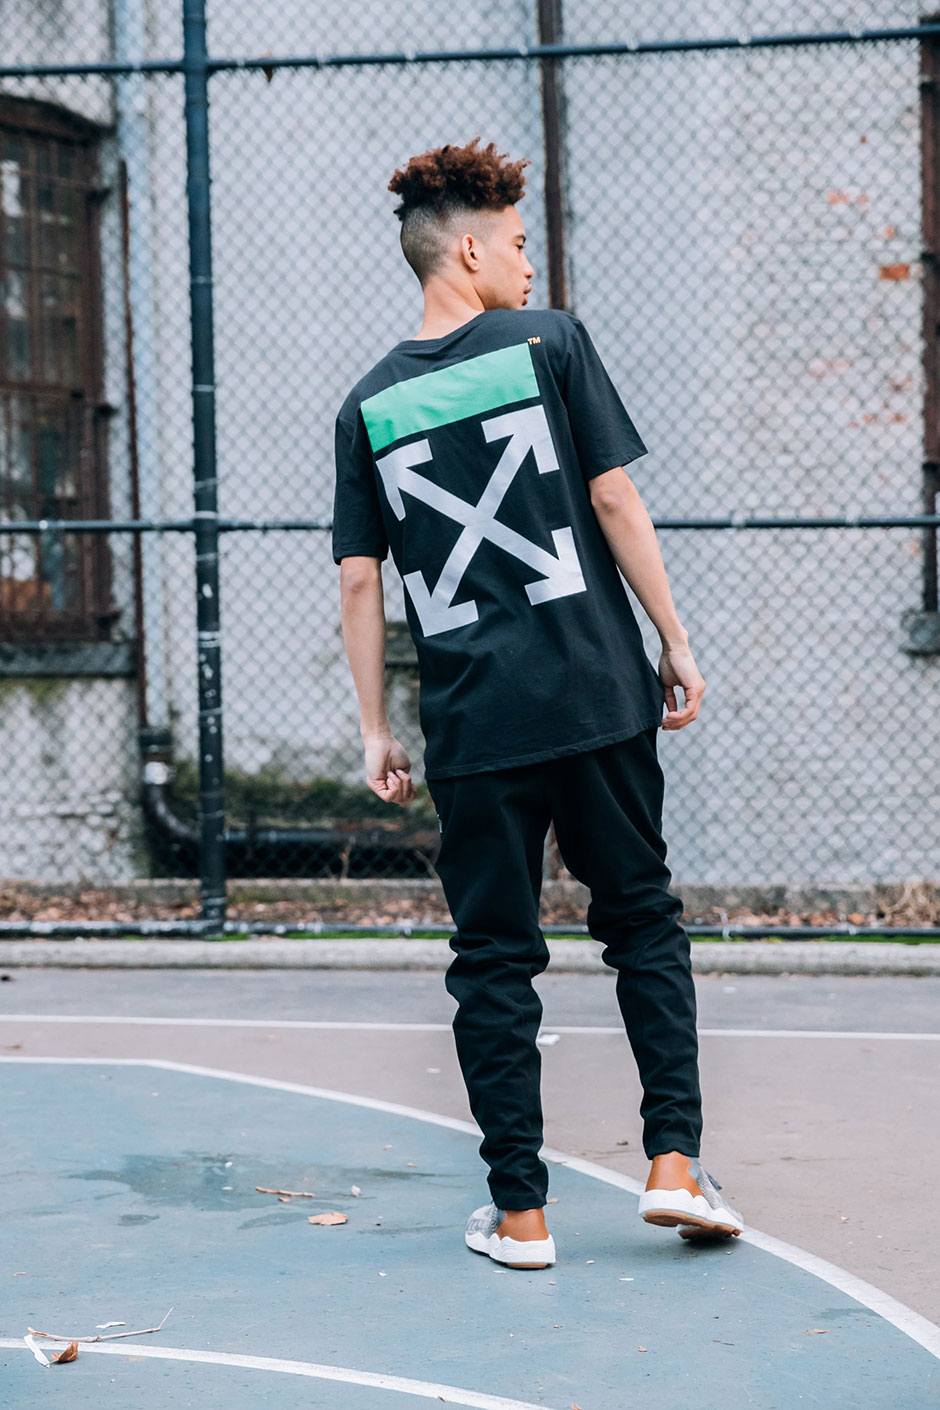 Virgil Abloh designs custom shirt for Nike's equality campaign